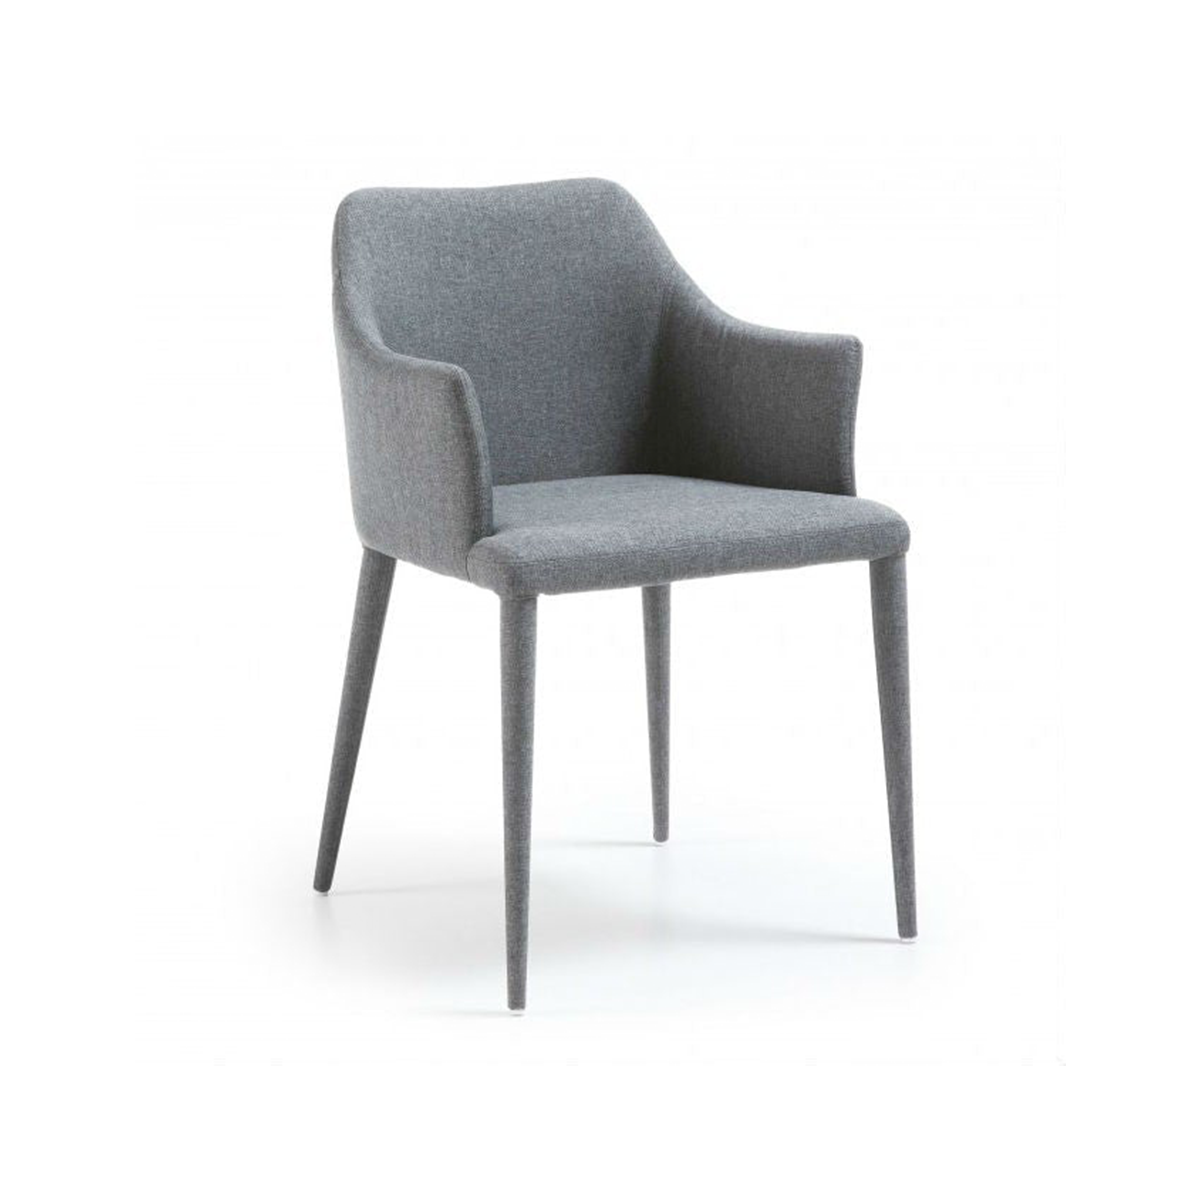 FondHouse Kona Dining Chair Light Grey